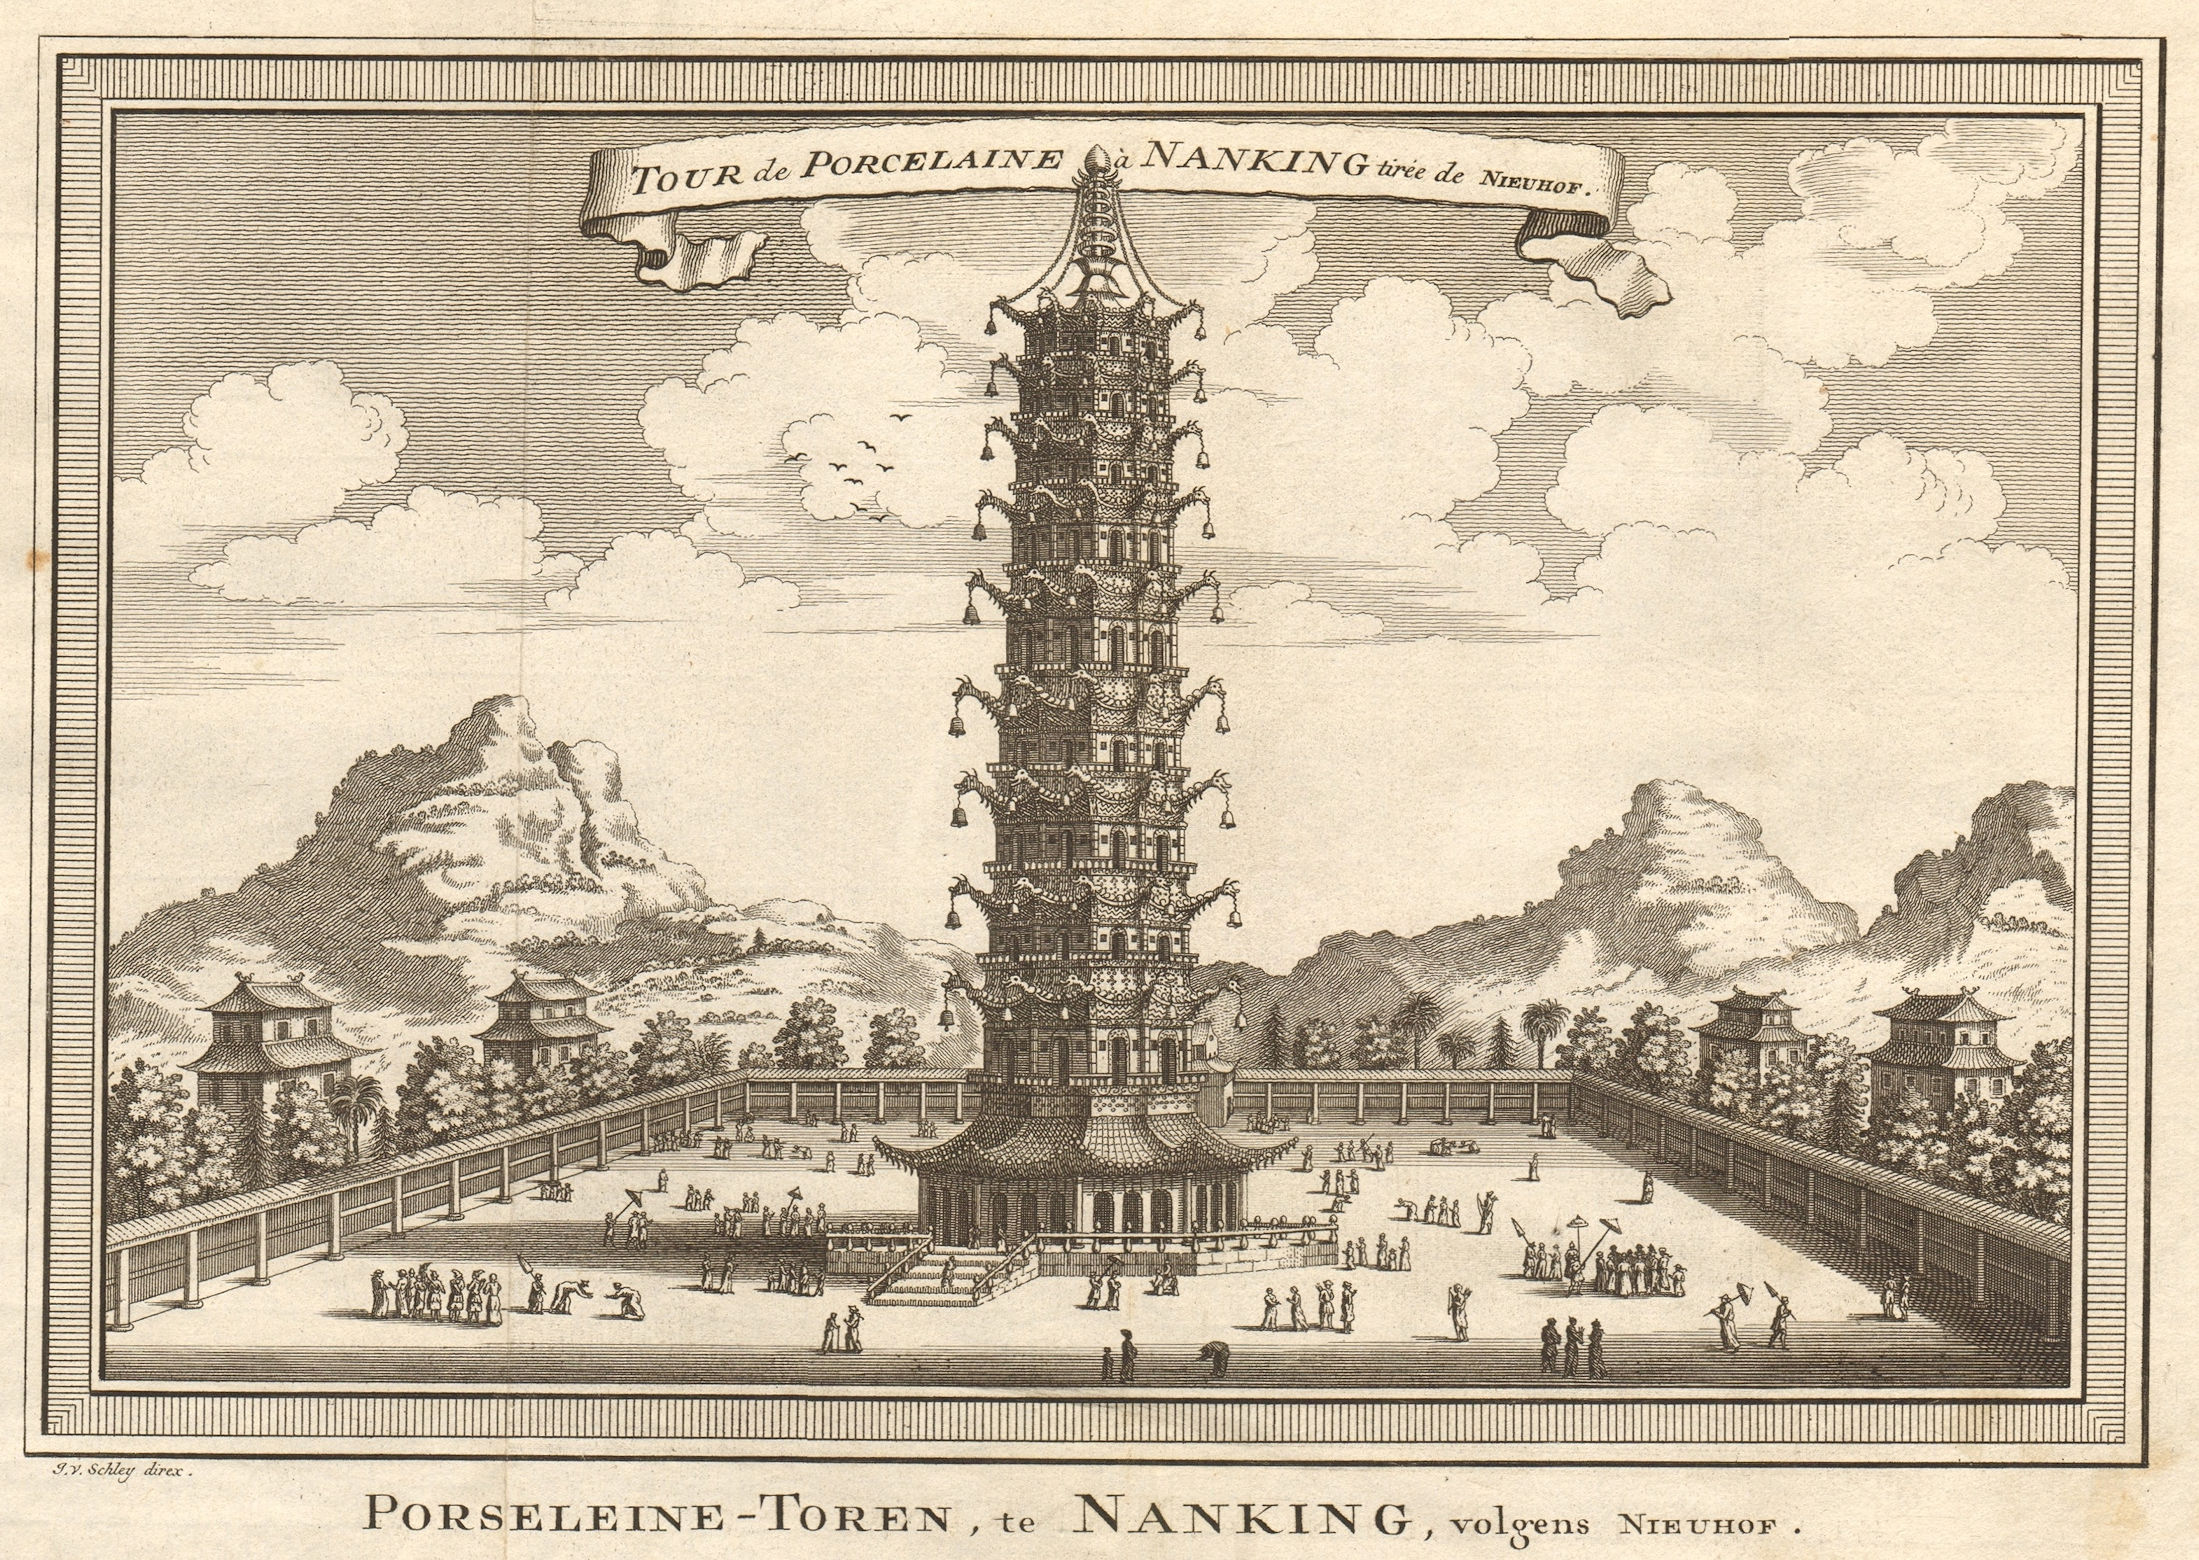 'Tour de Porcelaine à Nanking'. Nanjing tower. Great Bao'en Temple. SCHLEY 1749